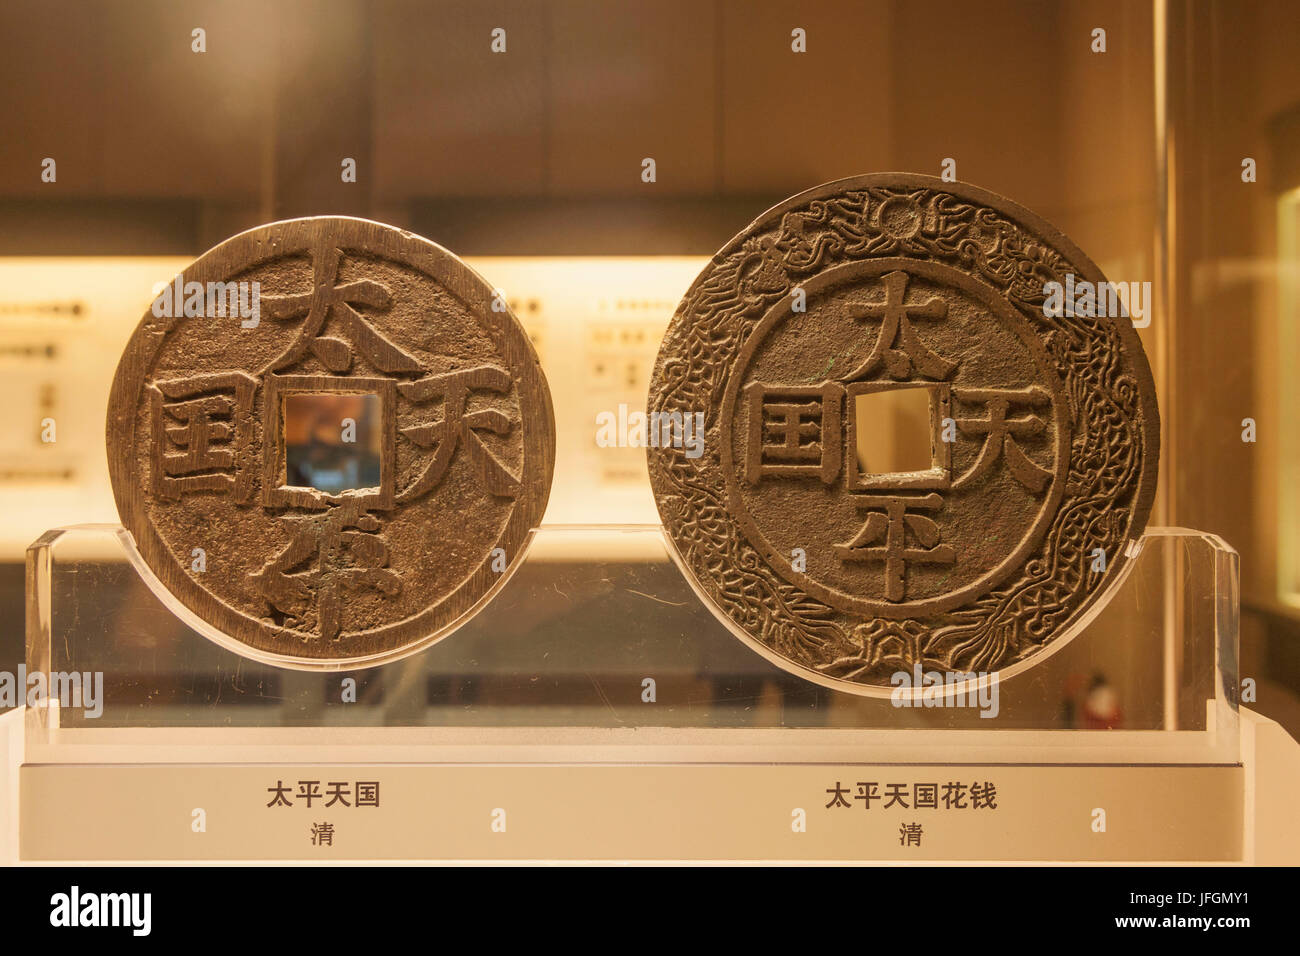 Cina, Shanghai, il Museo di Shanghai, monete dalla Dinastia Qing (1800s) Foto Stock